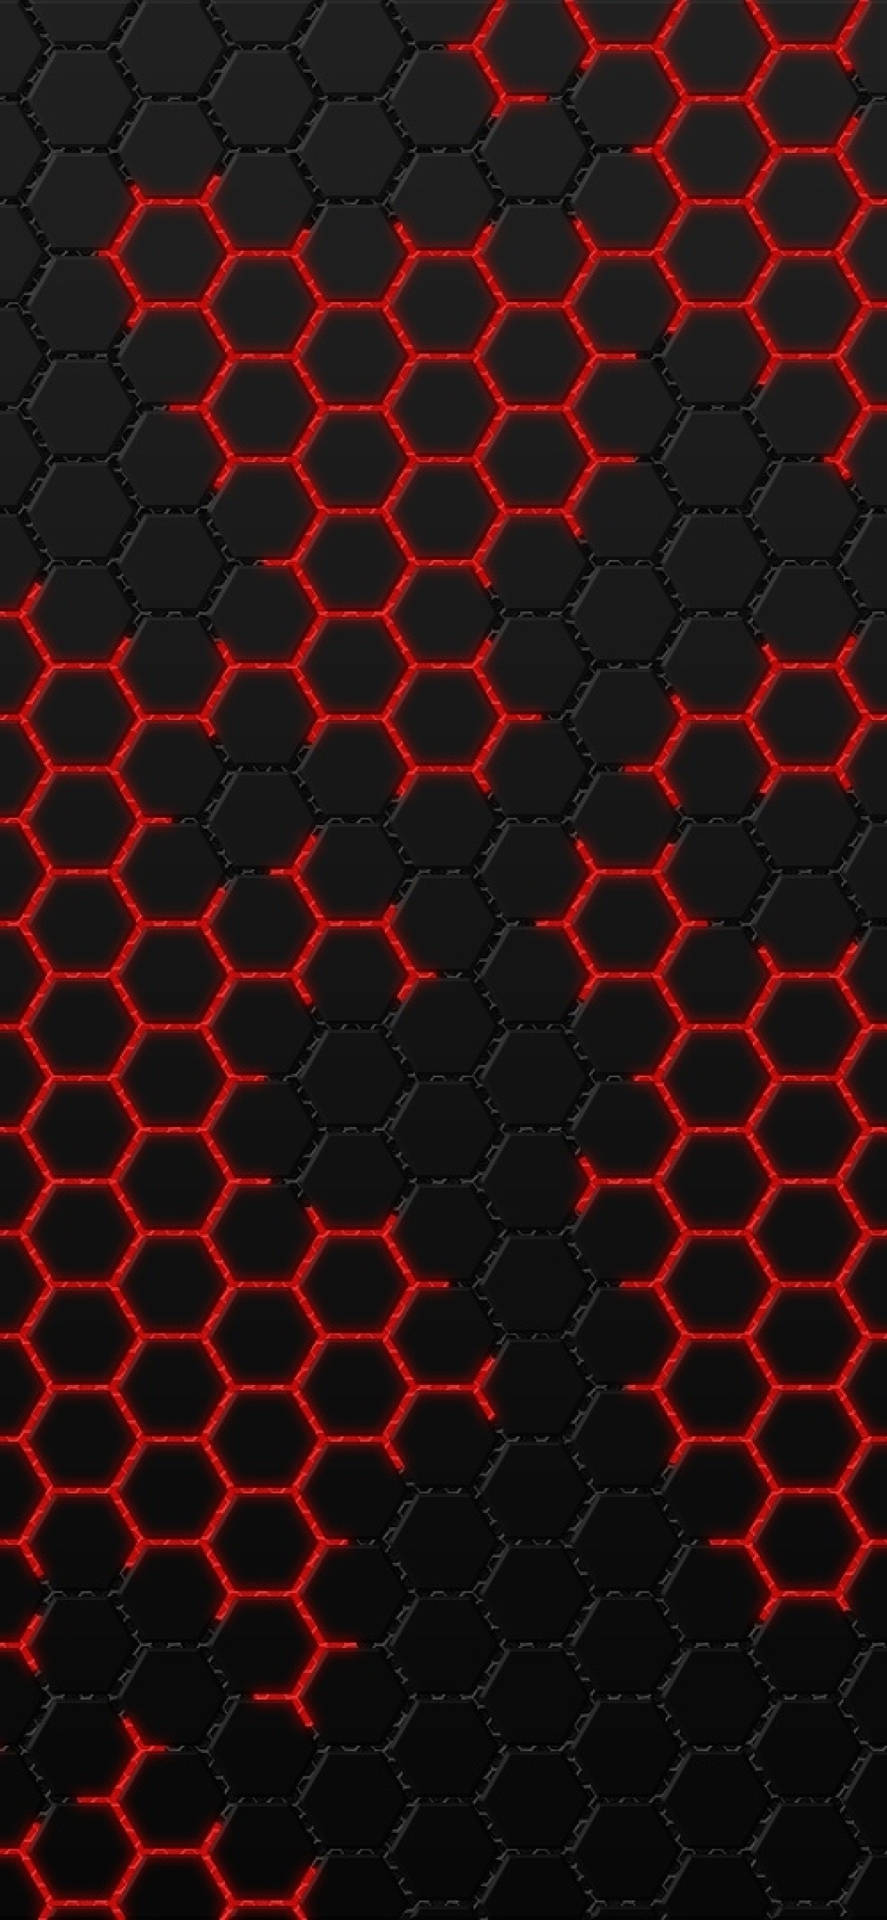 A Black And Red Hexagonal Pattern Wallpaper Wallpaper